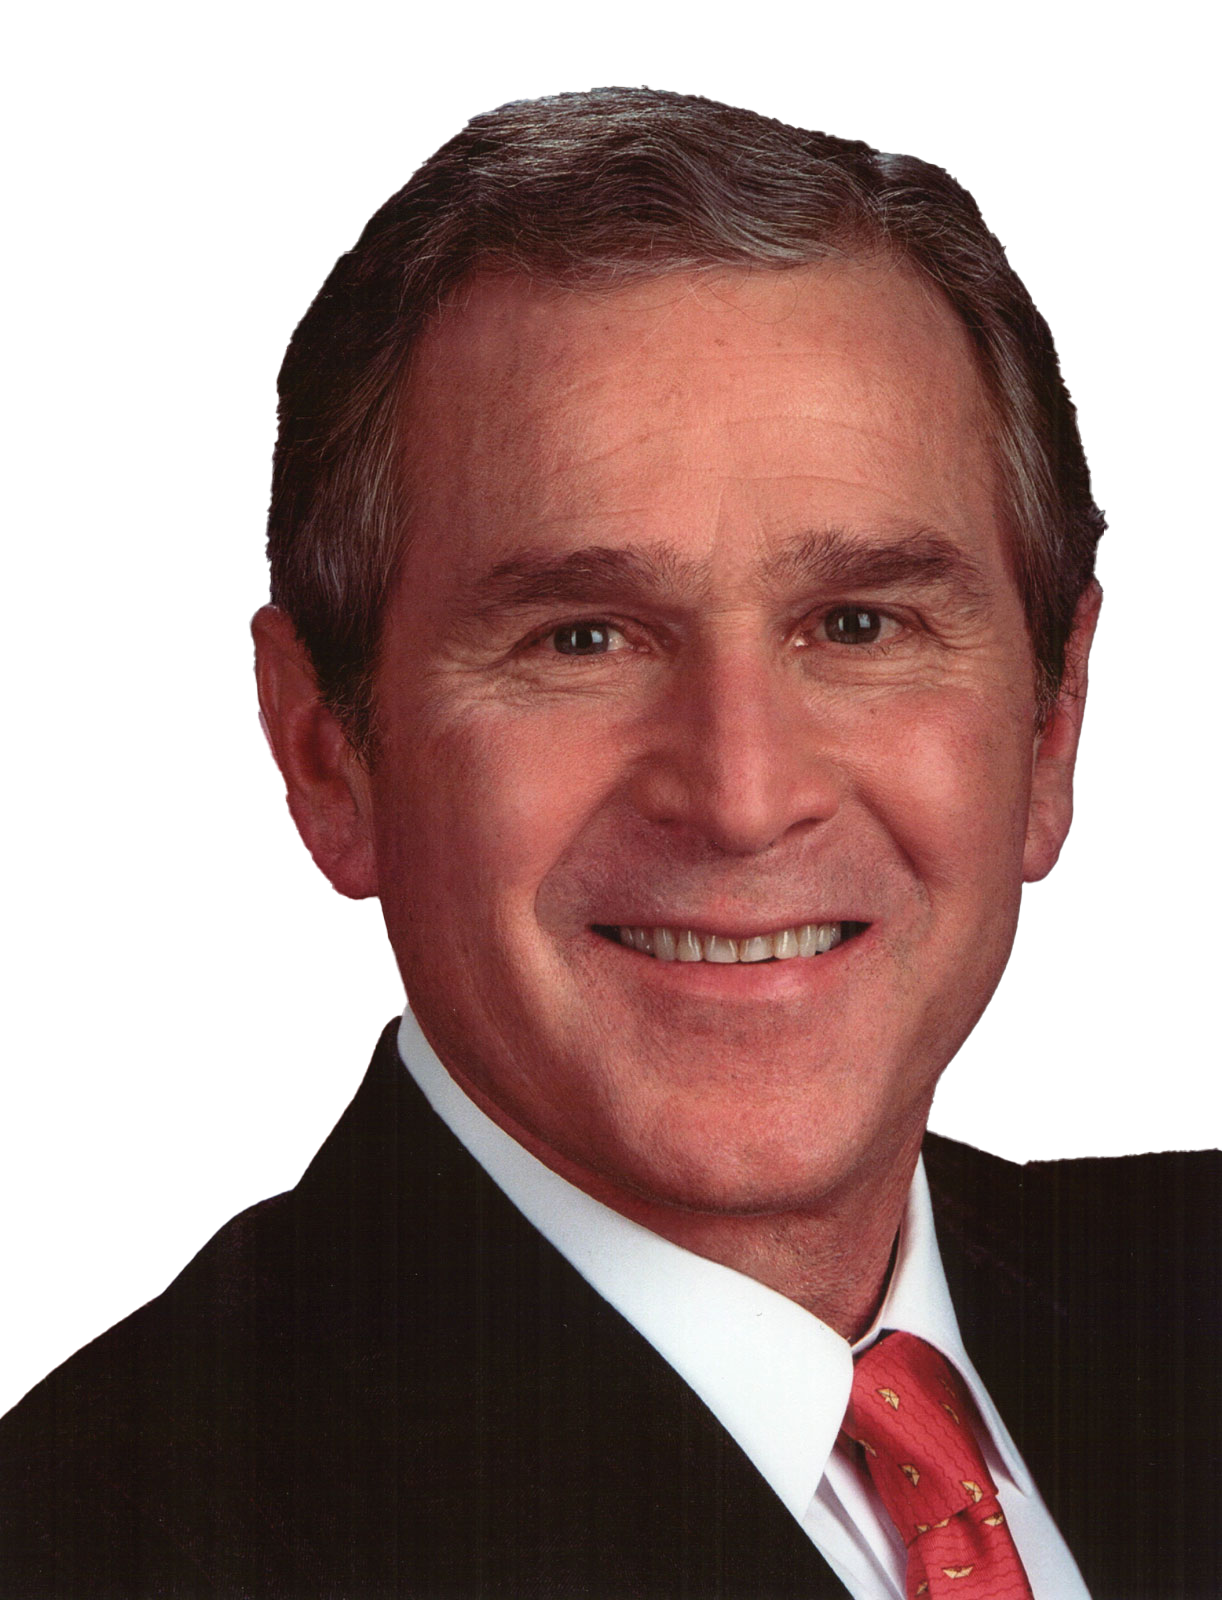 George Bush PNG images HD